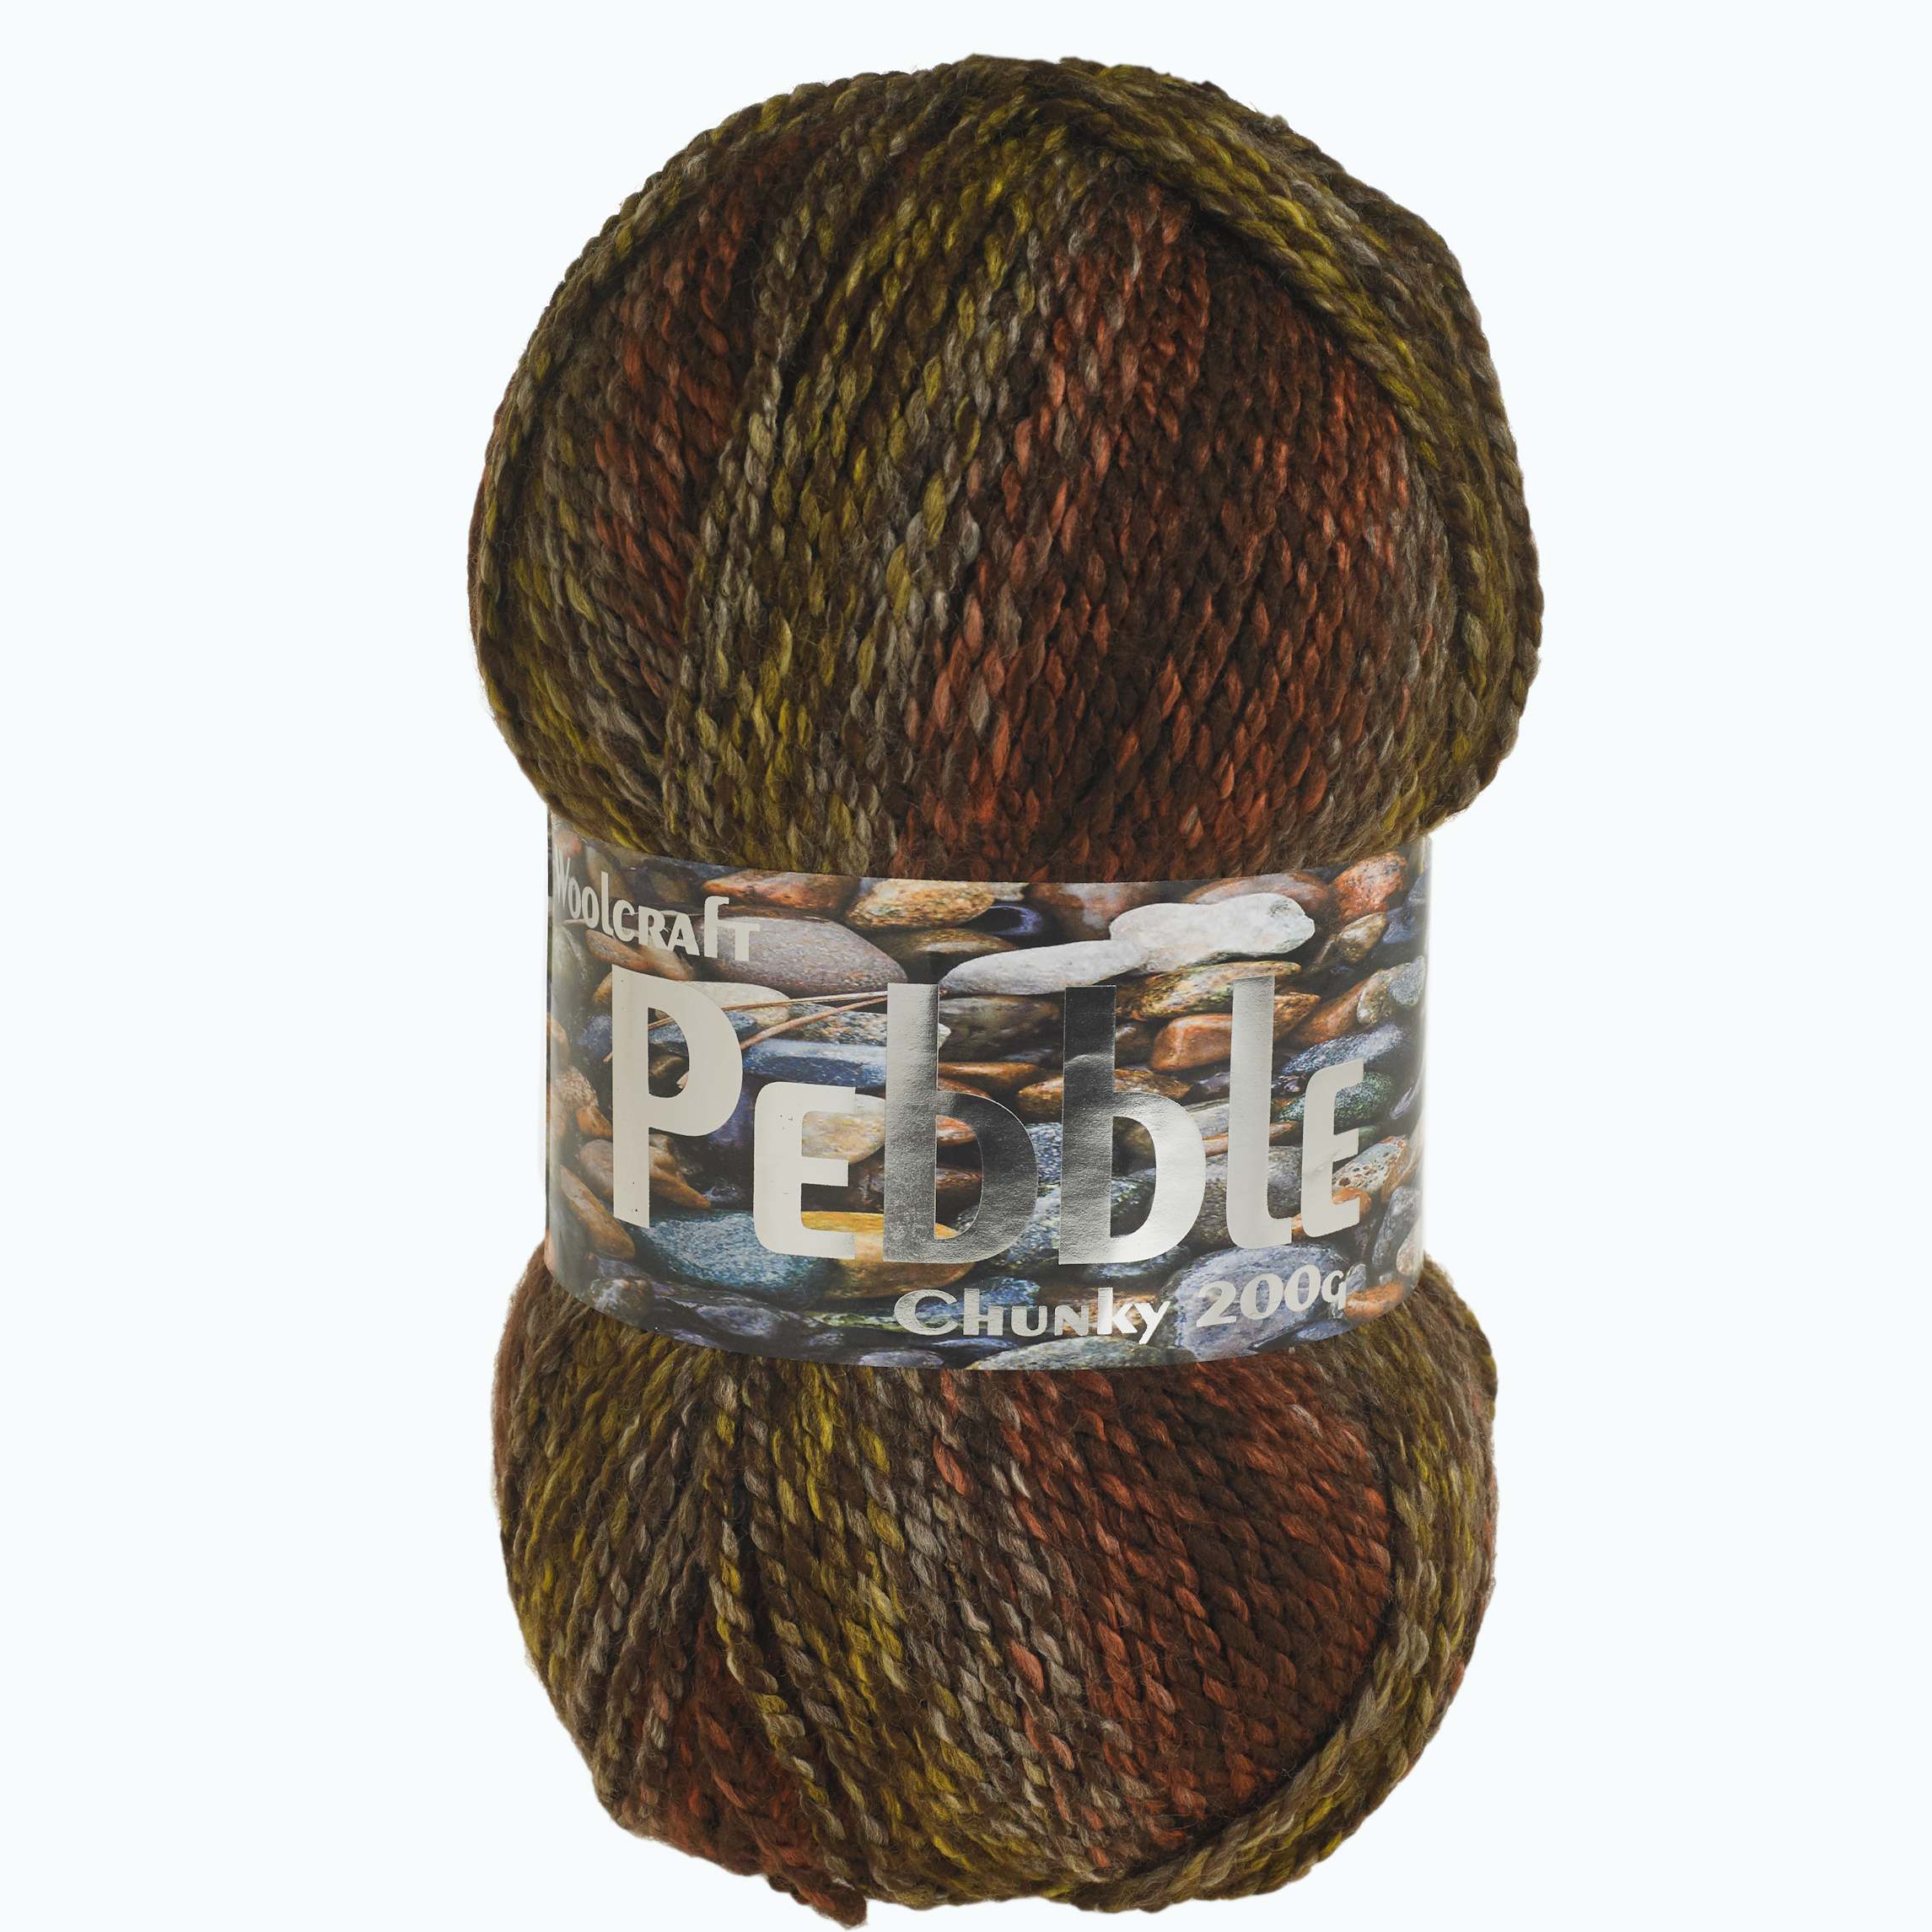 Woolcraft Pebble Chunky 031 Nutmeg 200g